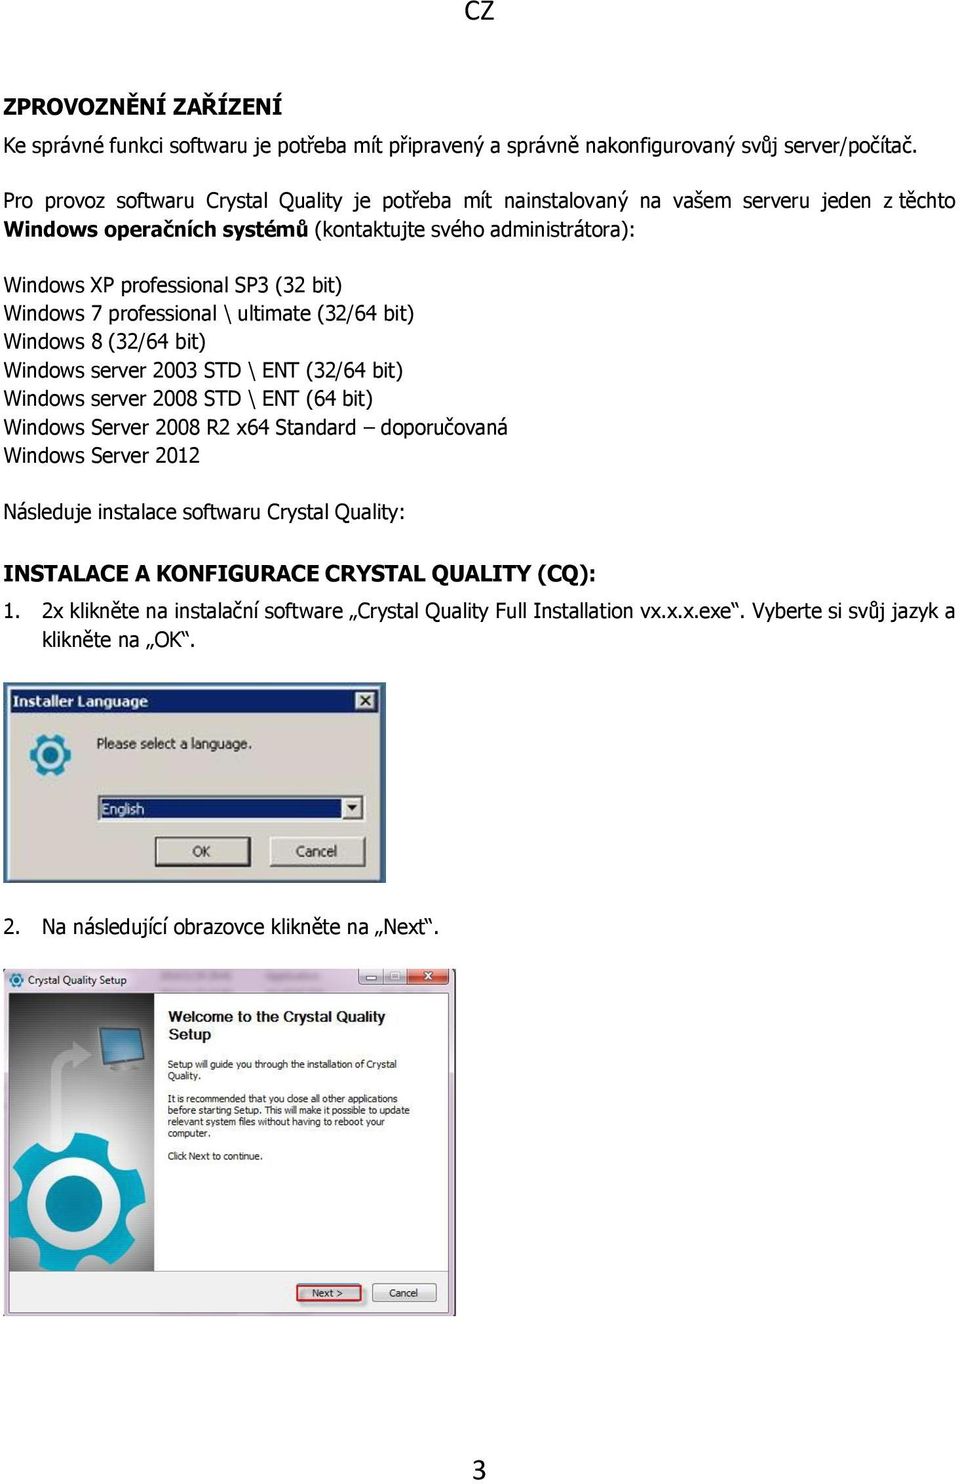 Windows 7 professional \ ultimate (32/64 bit) Windows 8 (32/64 bit) Windows server 2003 STD \ ENT (32/64 bit) Windows server 2008 STD \ ENT (64 bit) Windows Server 2008 R2 x64 Standard doporučovaná